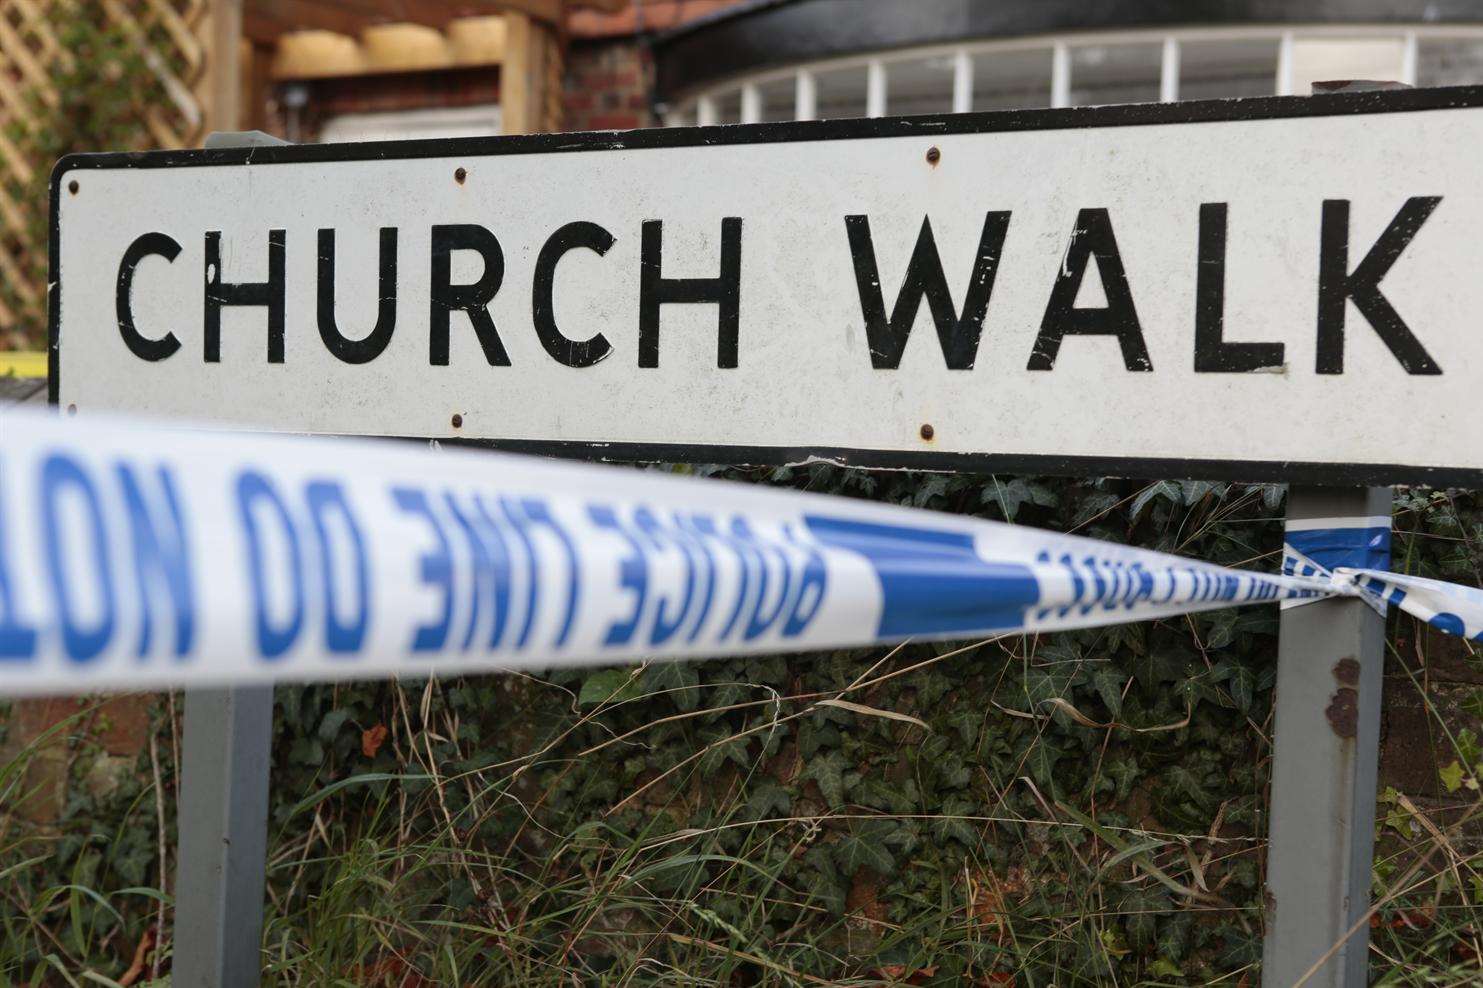 The body was discovered near Church Walk